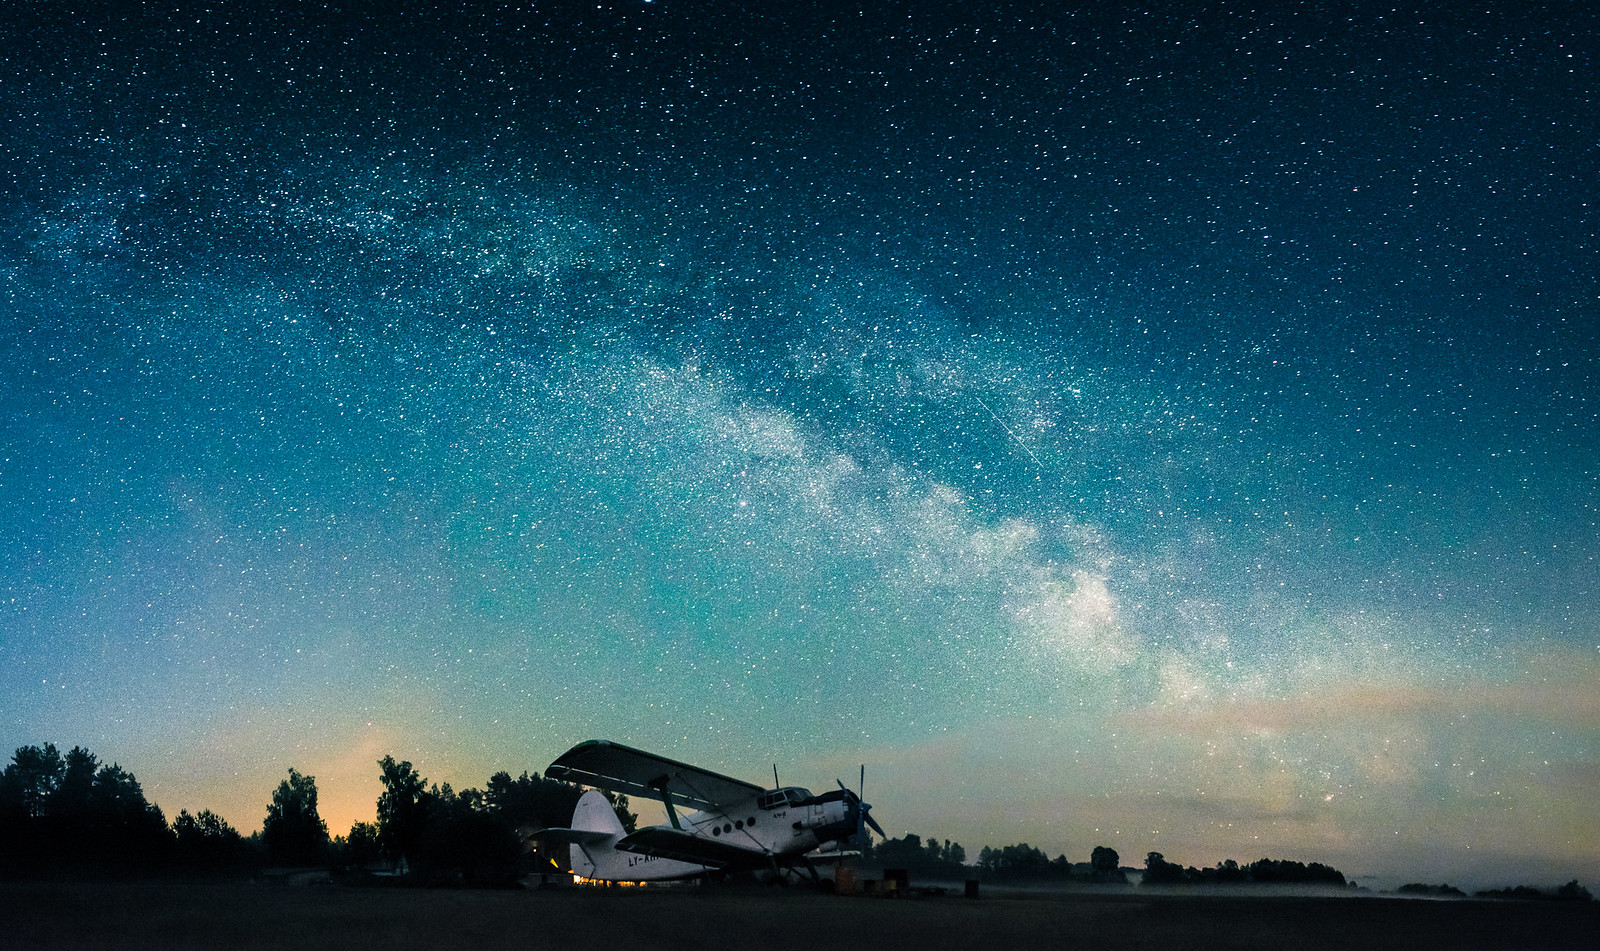 Astro night and old aerodrome